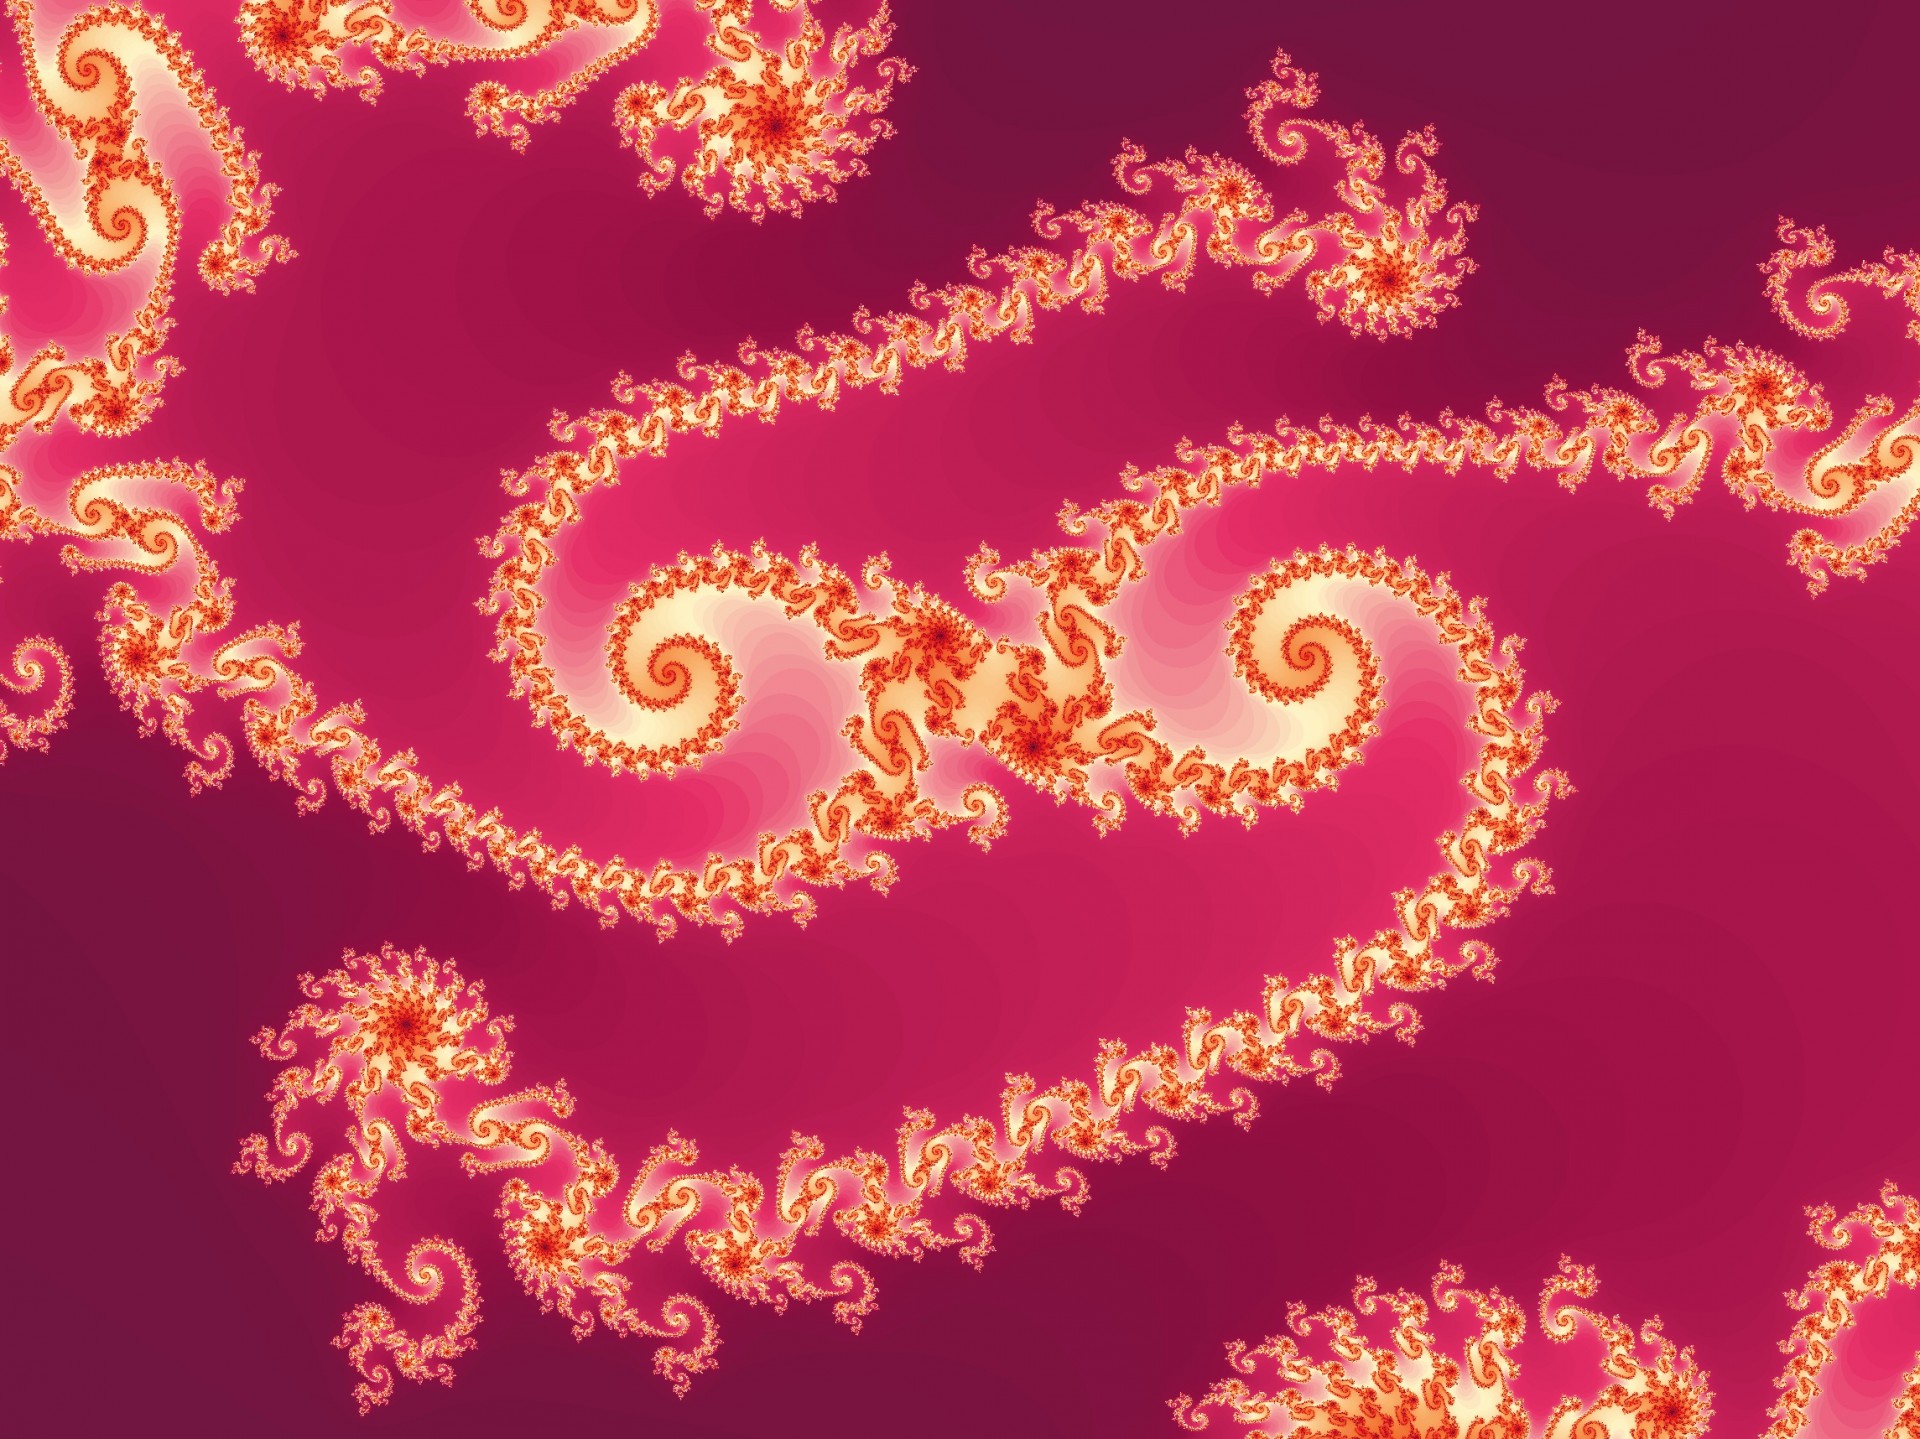 Rosa Fraktalspirale